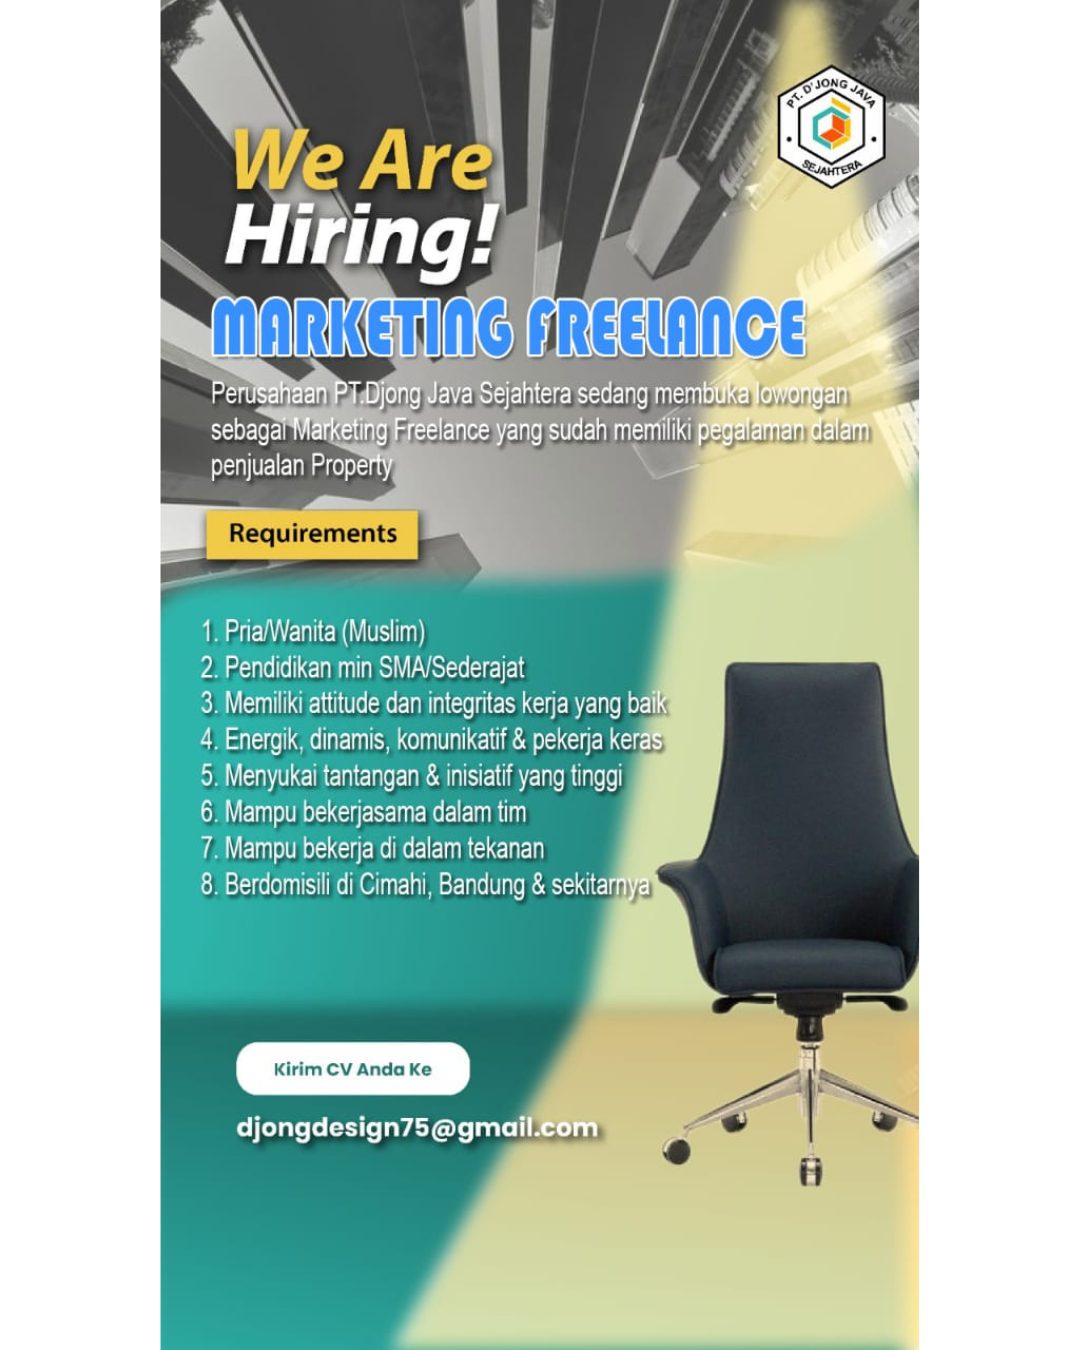 Djong Design – Marketing Freelance di Bandung